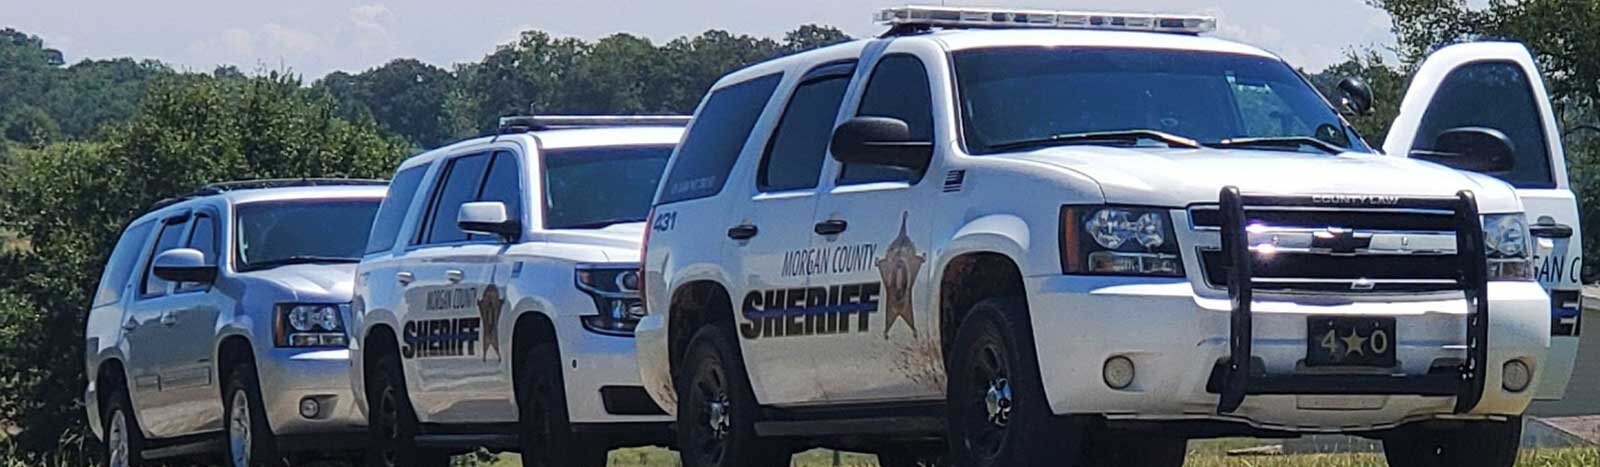 Morgan County Sheriff vehicles responding to call